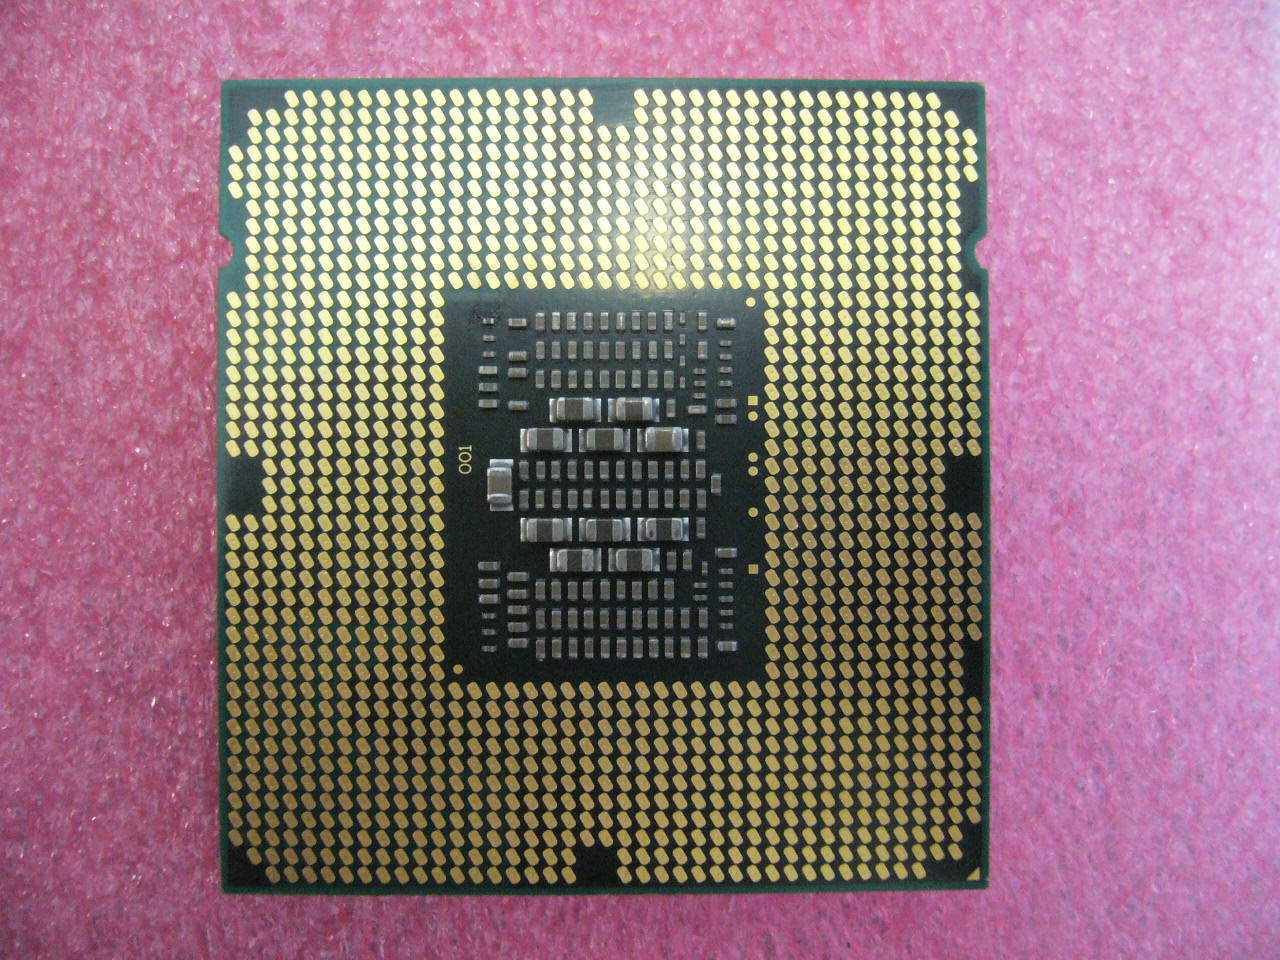 QTY 1x Intel CPU E5-2403 CPU Quad-Cores 1.8Ghz LGA1356 SR0LS - Click Image to Close